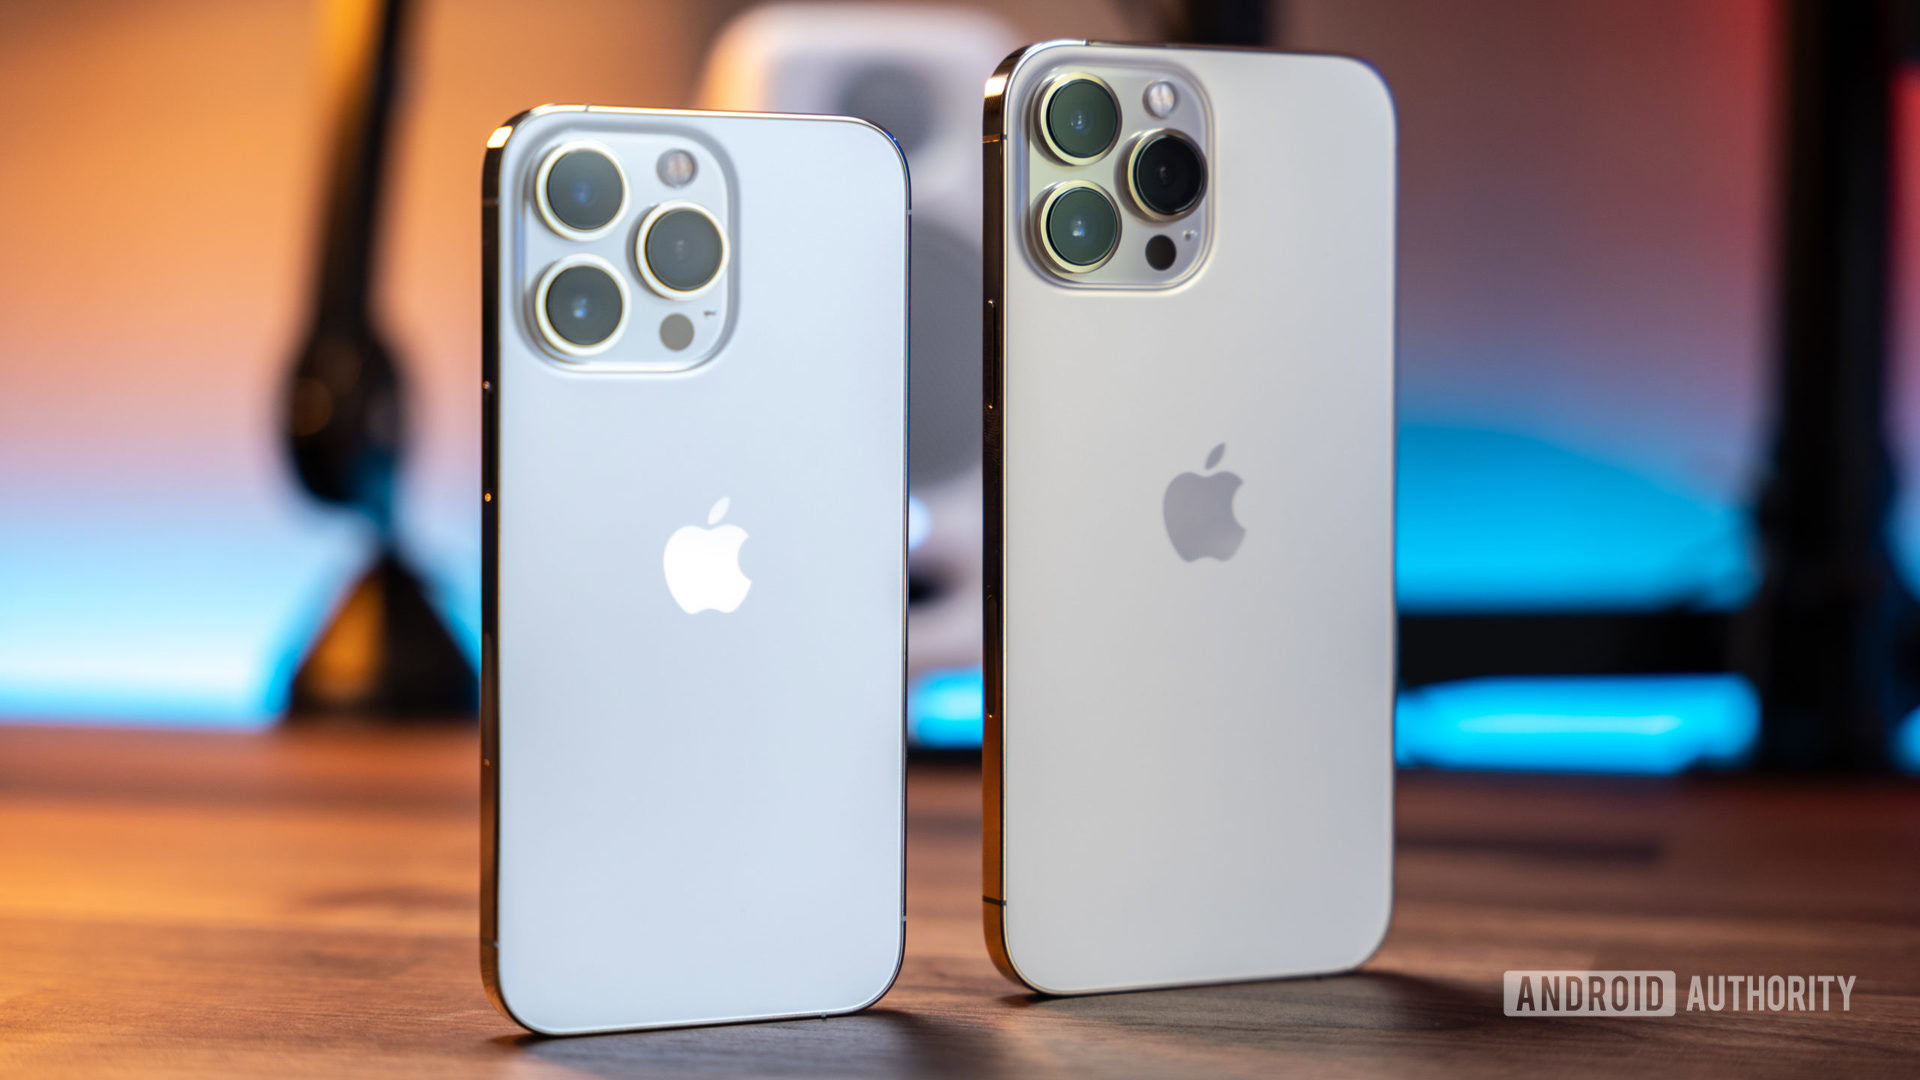 Apple iPhone 13 Pro Series 2 - The best selfie camera phones